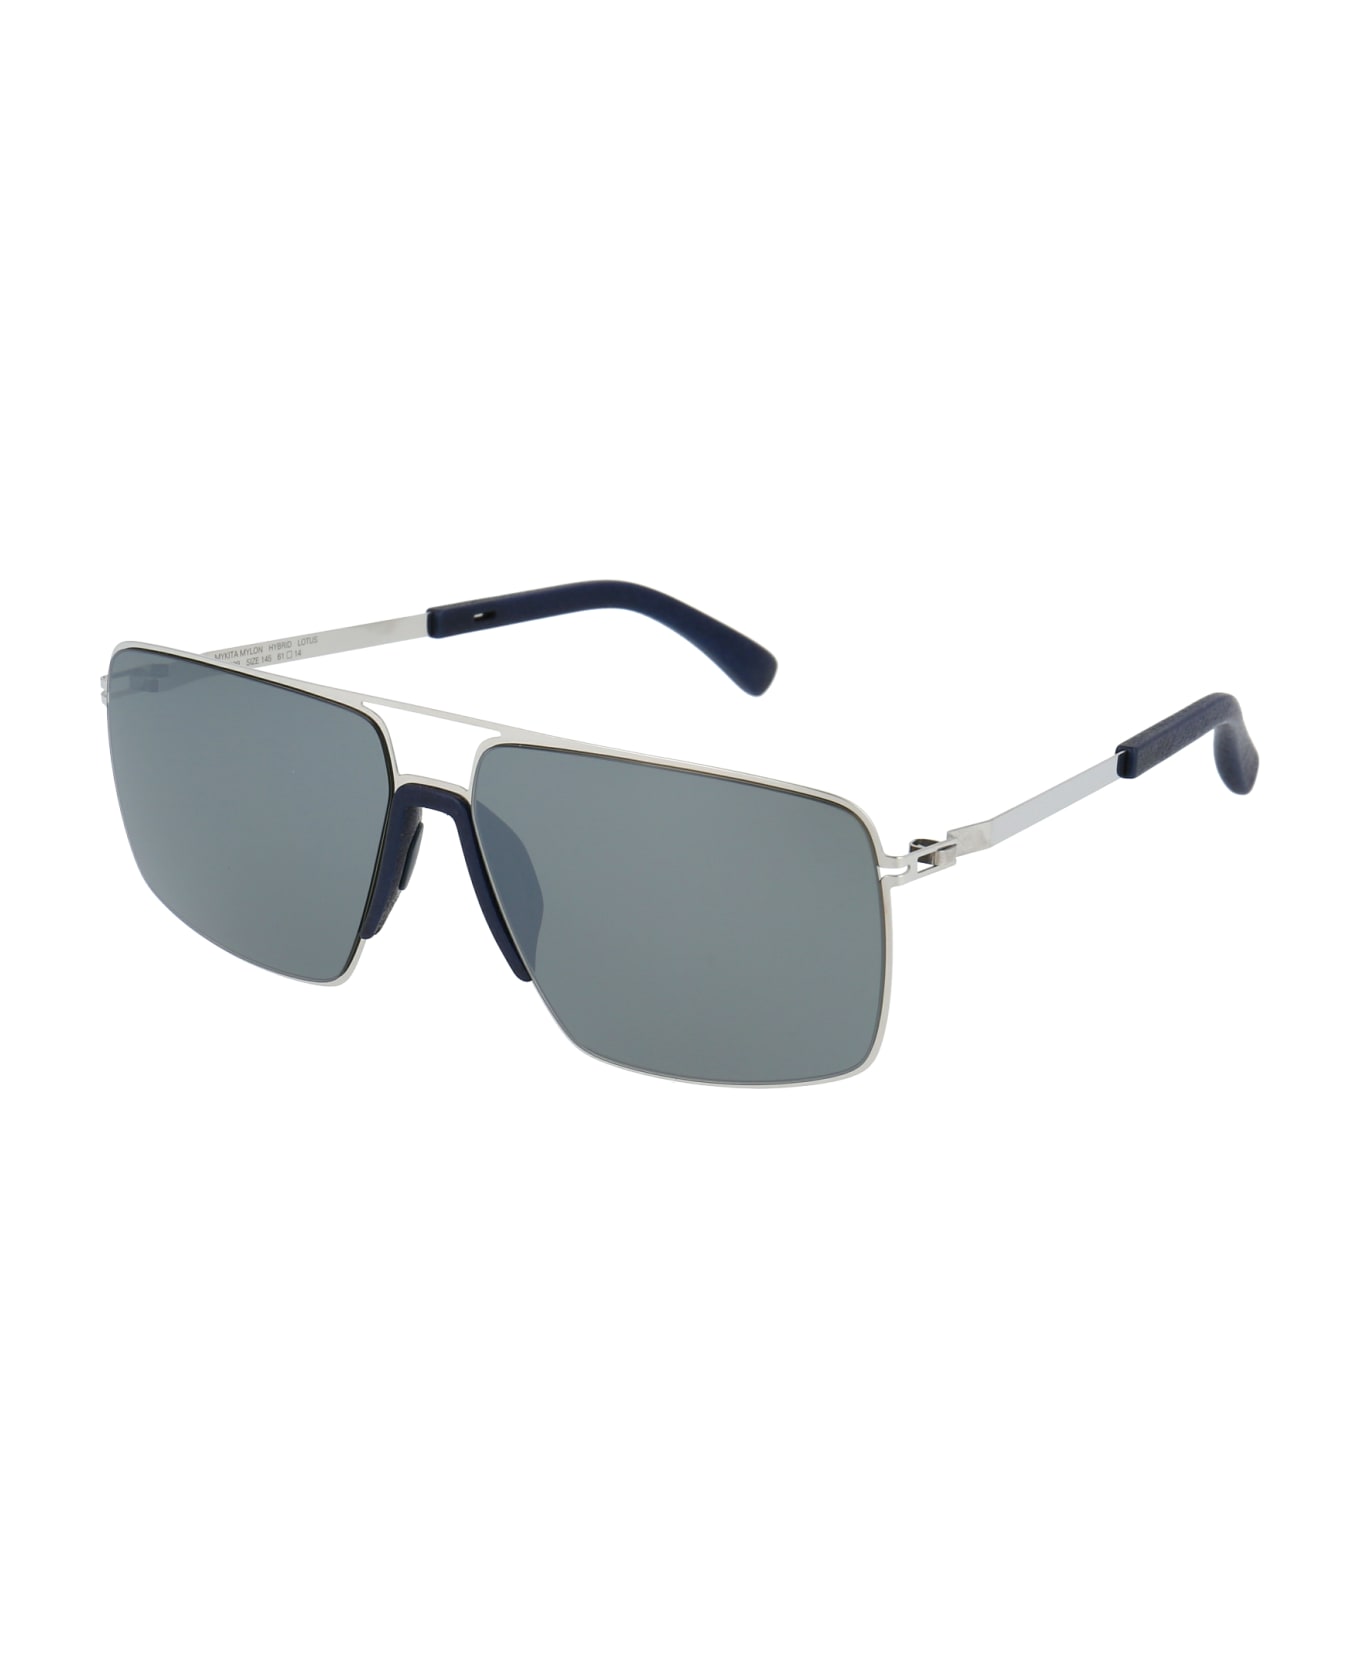 Mykita Lotus Sunglasses - 309 MH10 Navy Blue/Shiny Silver Light Silver Flash サングラス